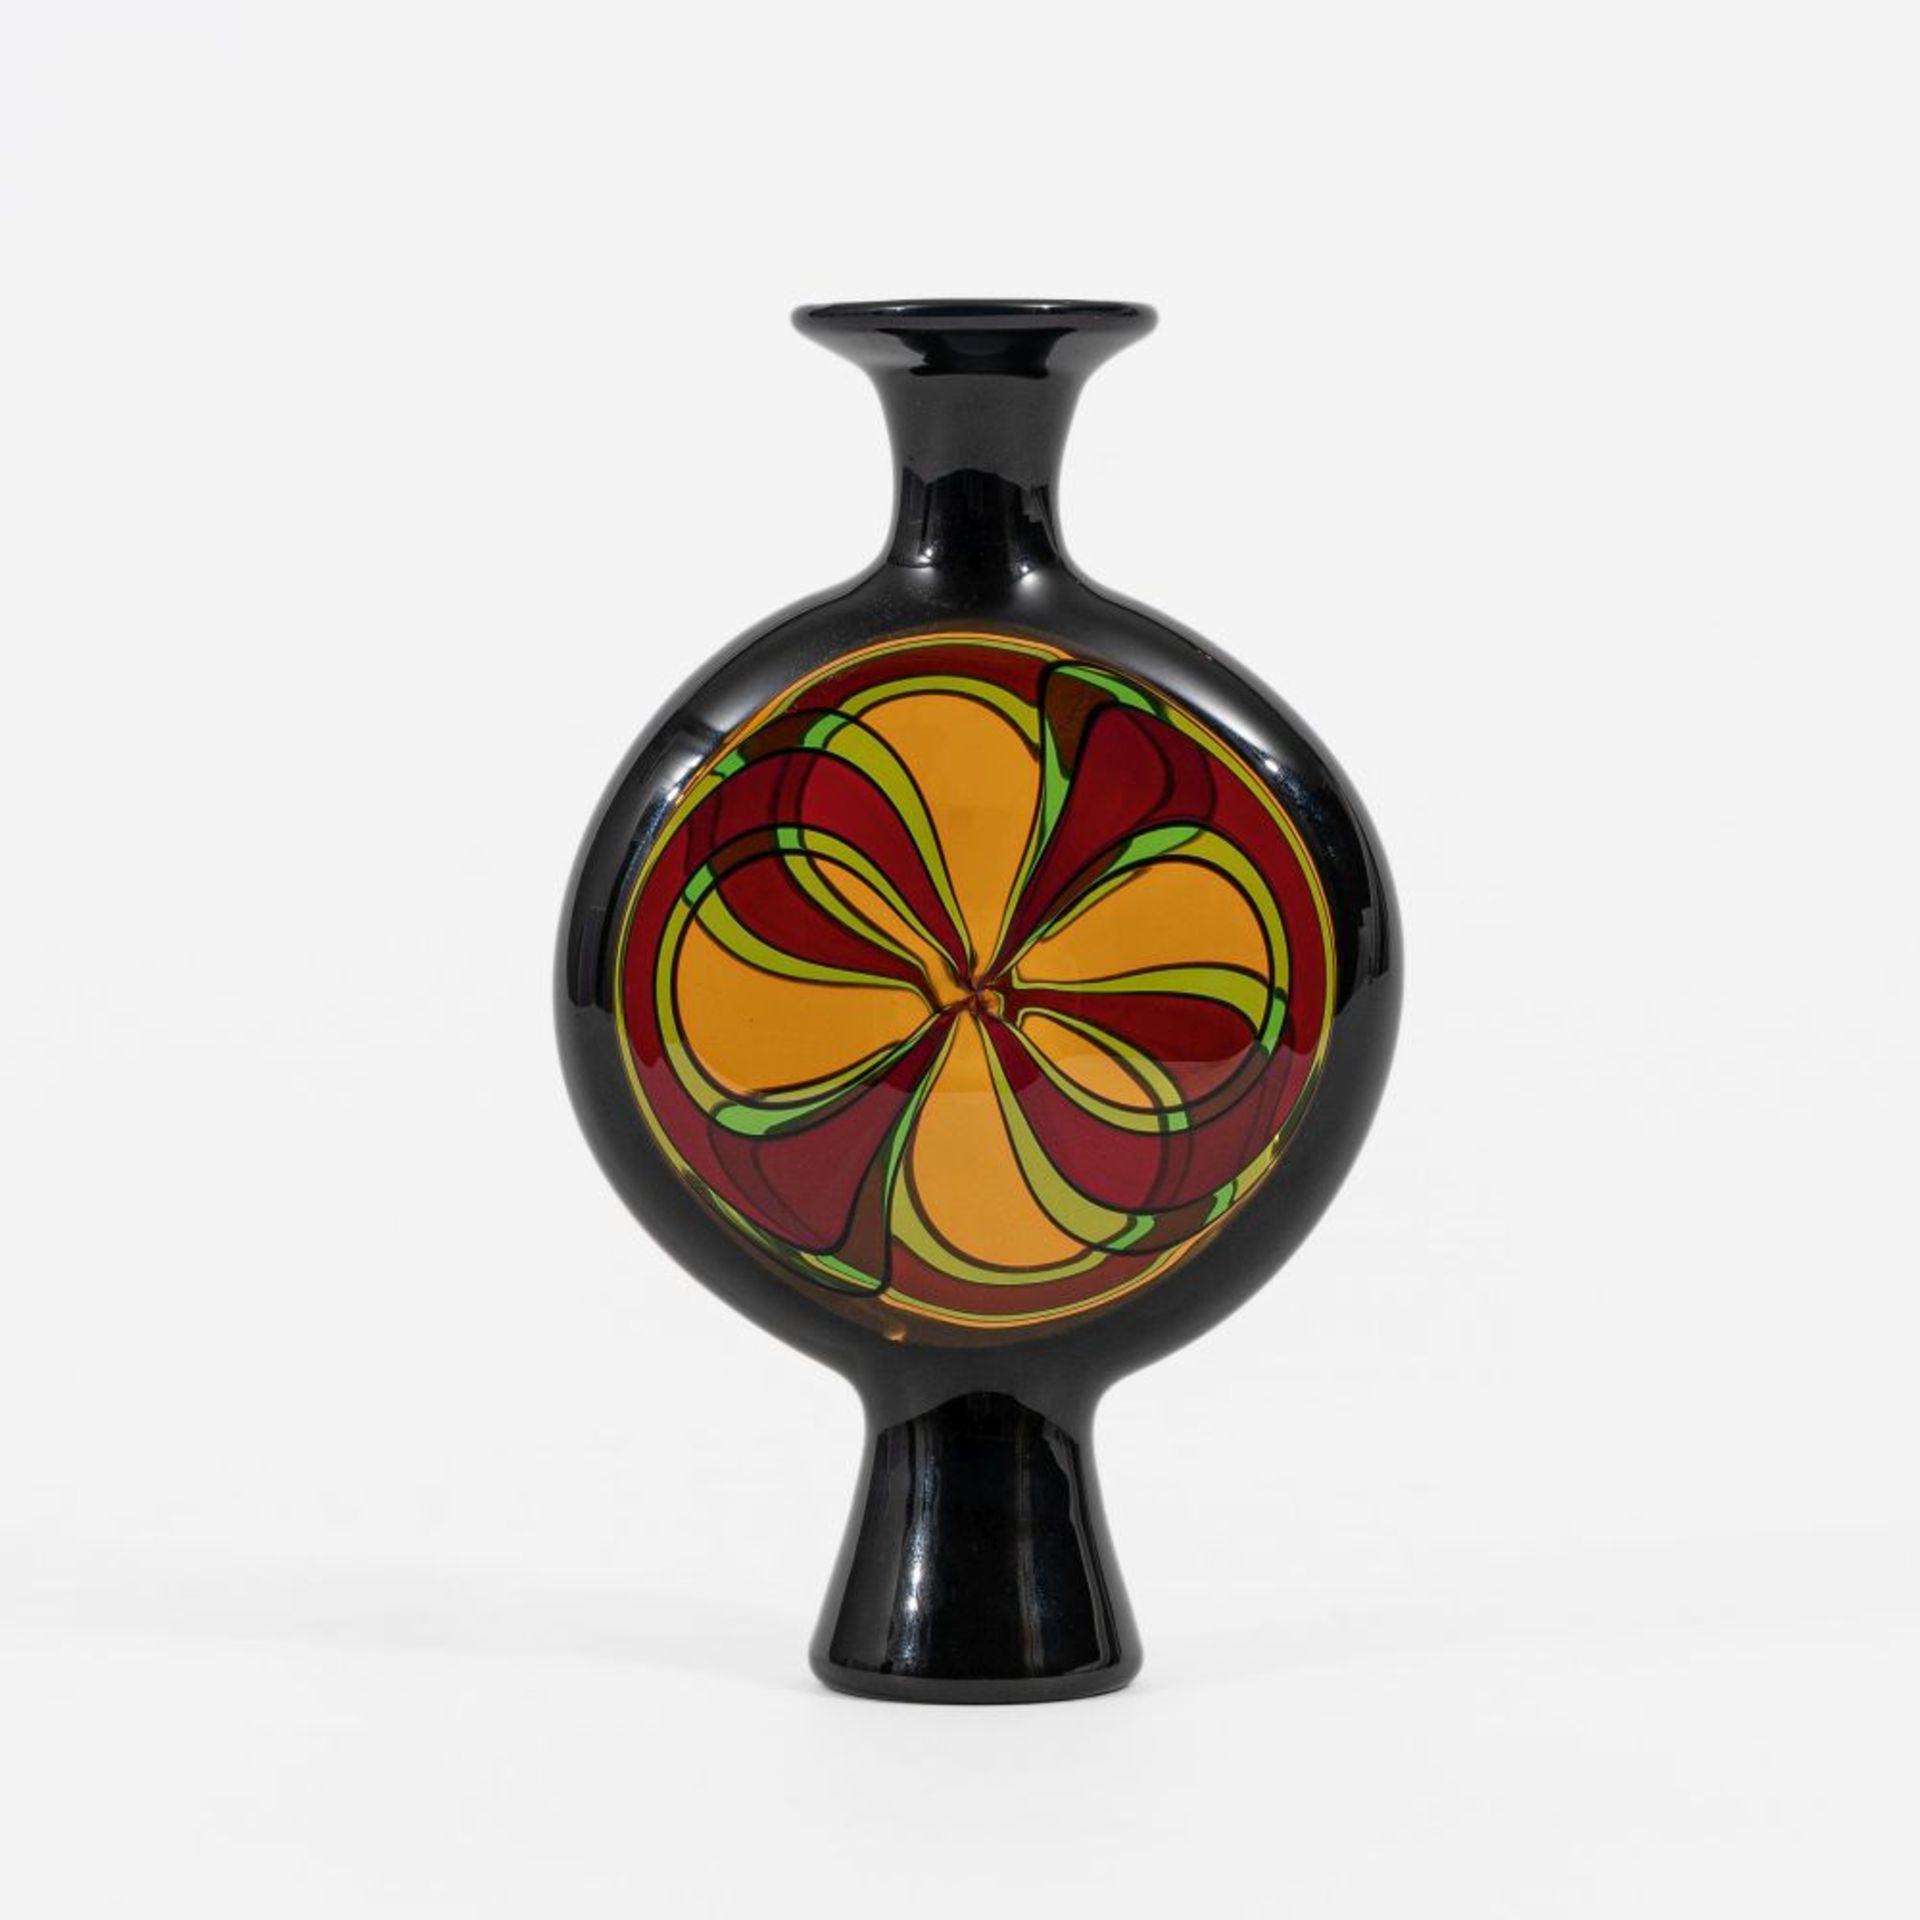 Wallstab, Kurt (1920 - 2002). A Vase 'Kaleidoskop'.